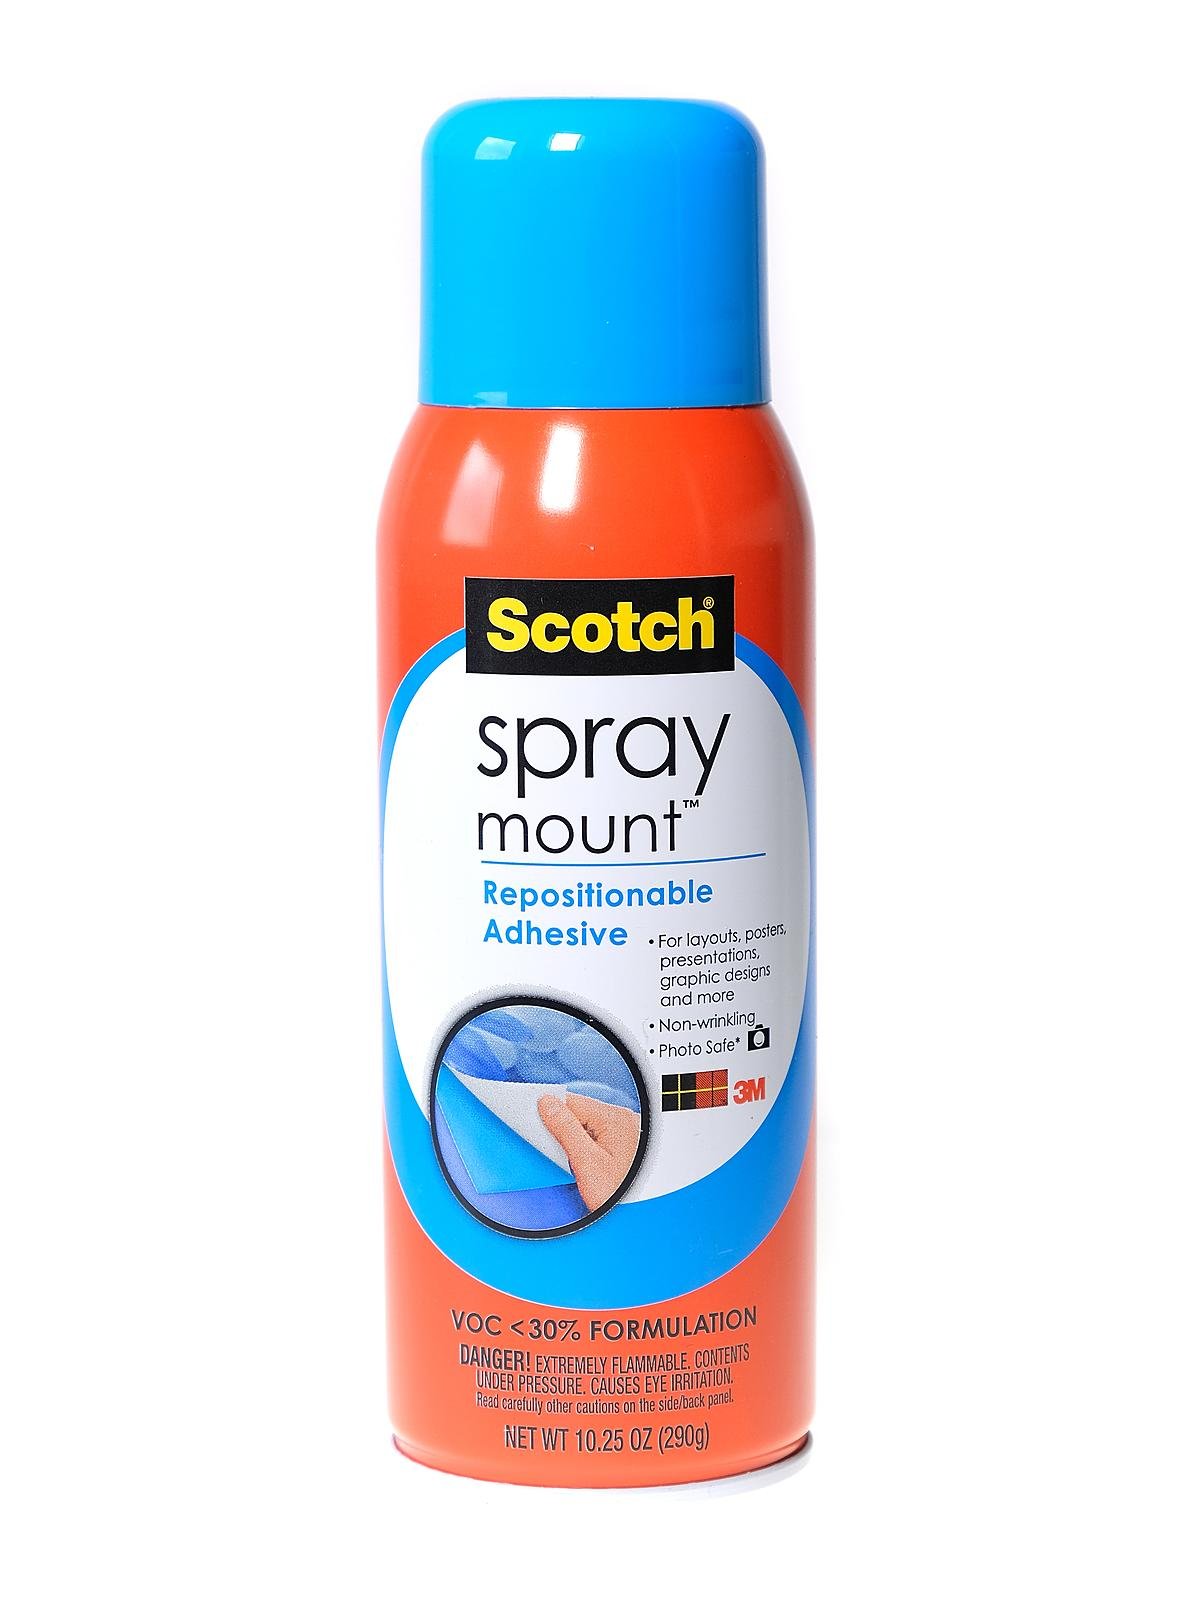 Buy 3M Spray Mount spray adhesive online at Modulor